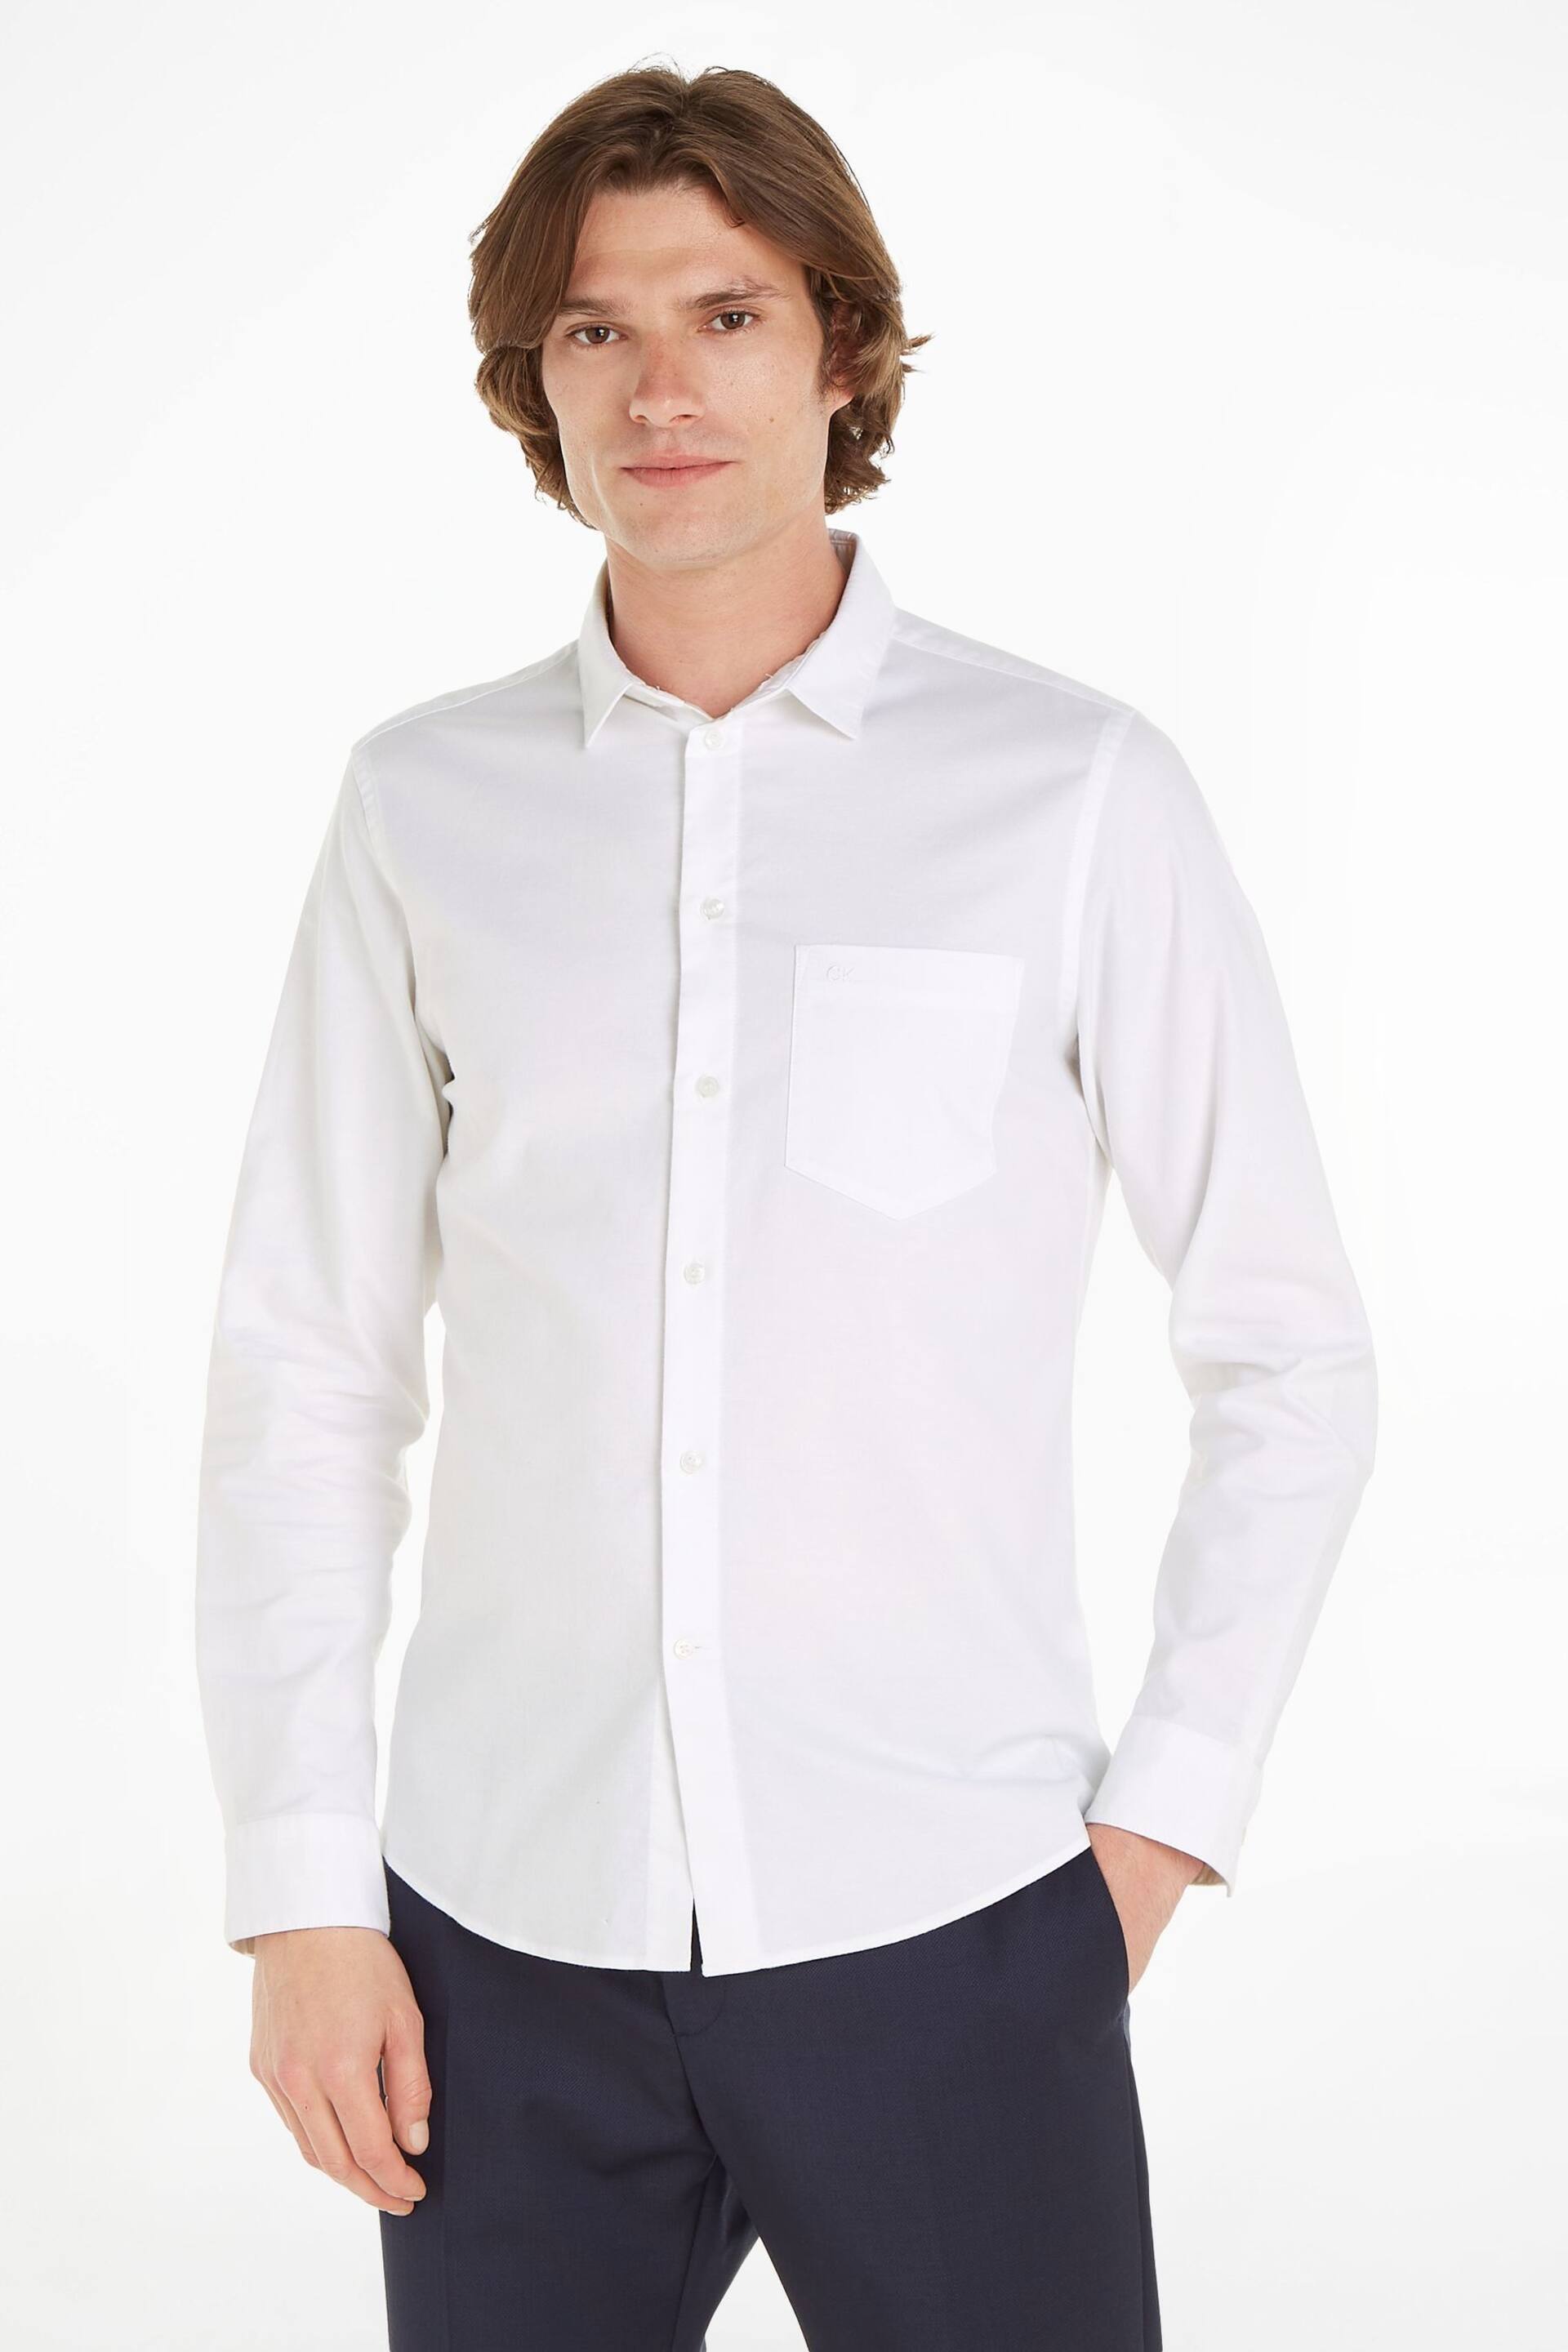 Calvin Klein White Stretch Oxford Shirt - Image 1 of 7